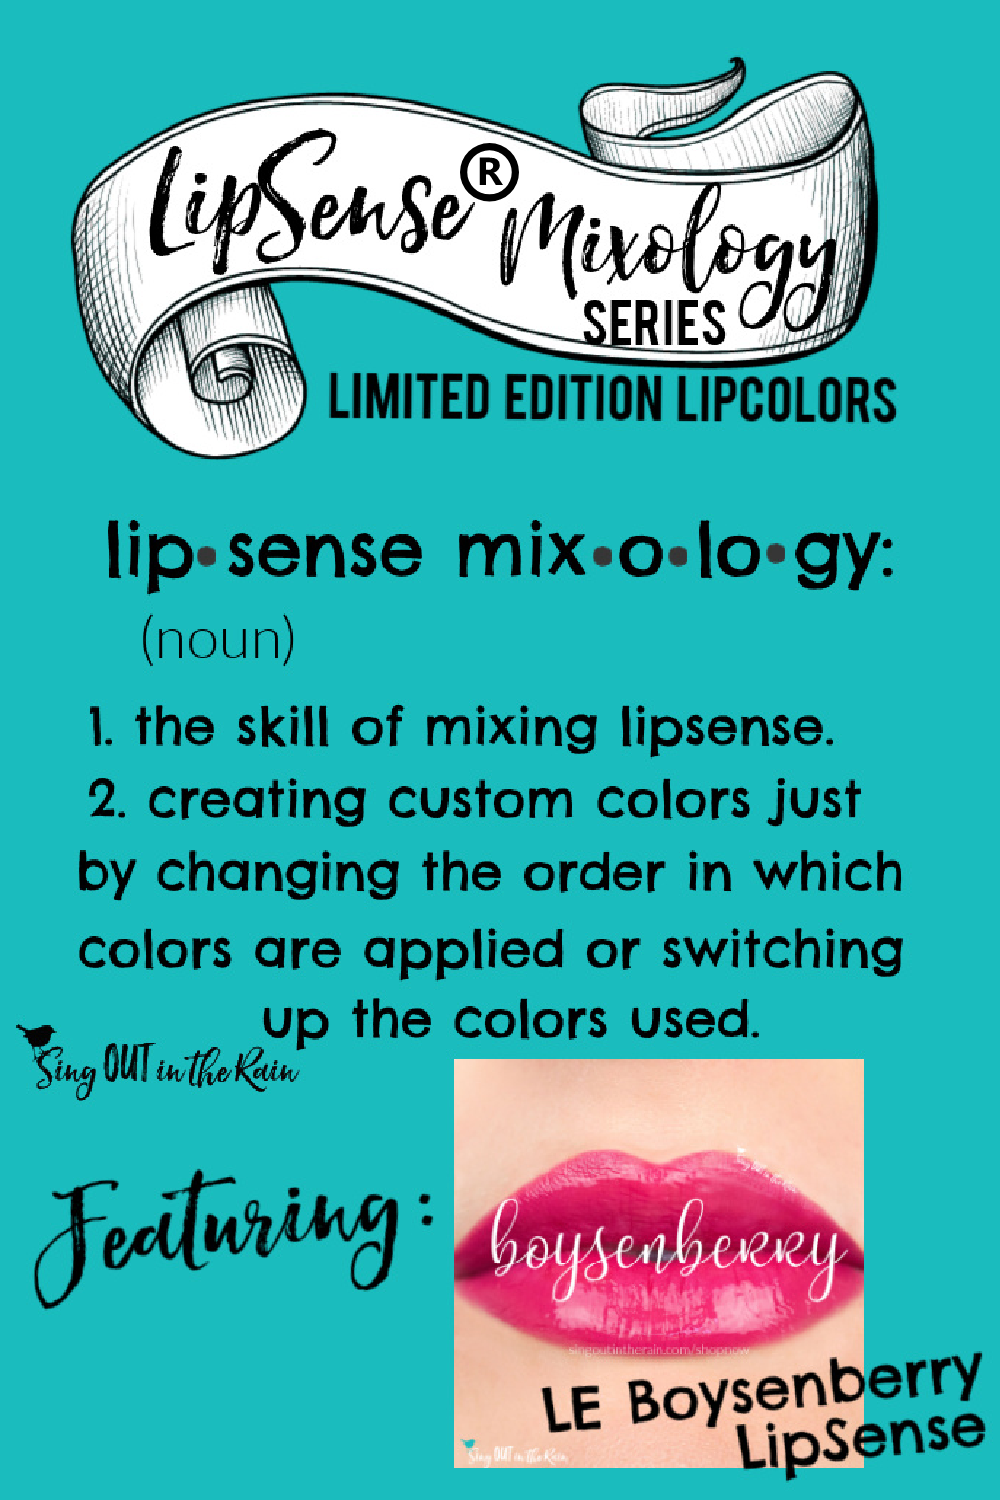 The Ultimate Guide to Boysenberry LipSense Mixology